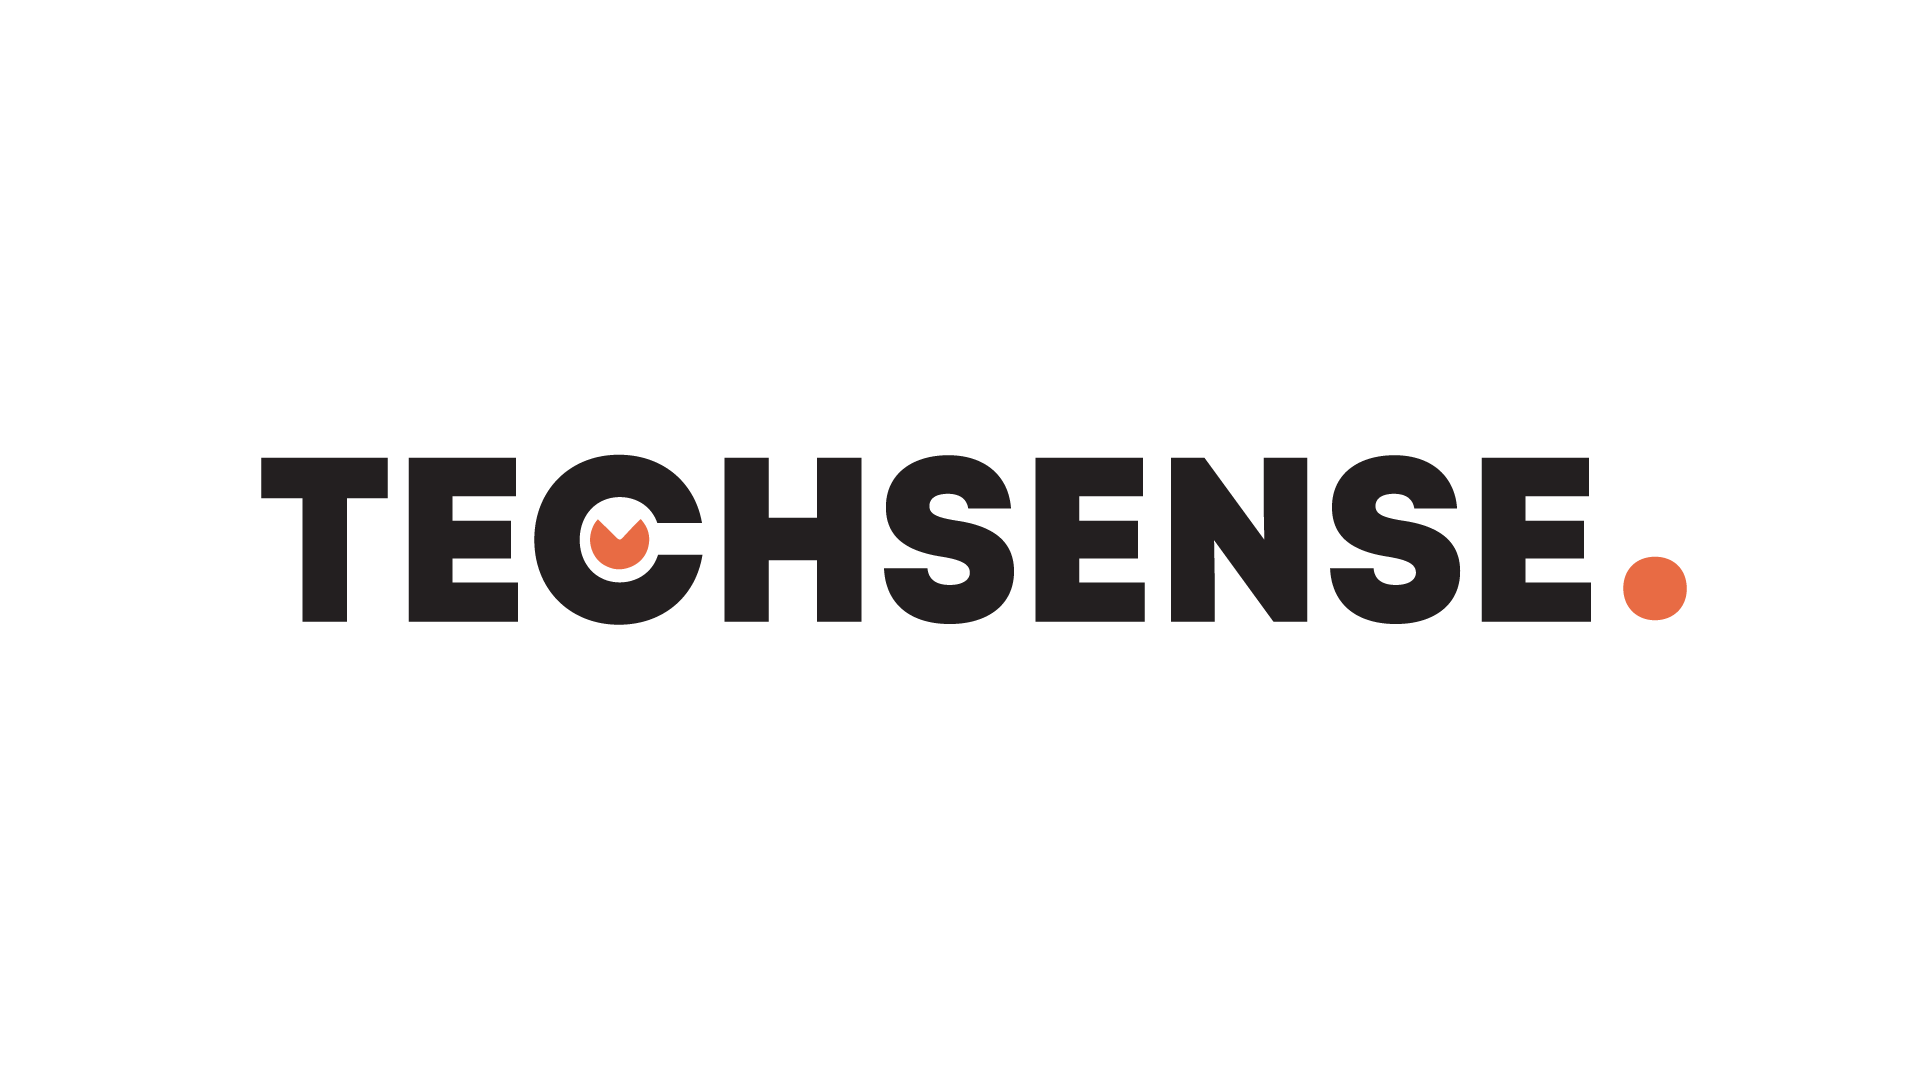 TechSense